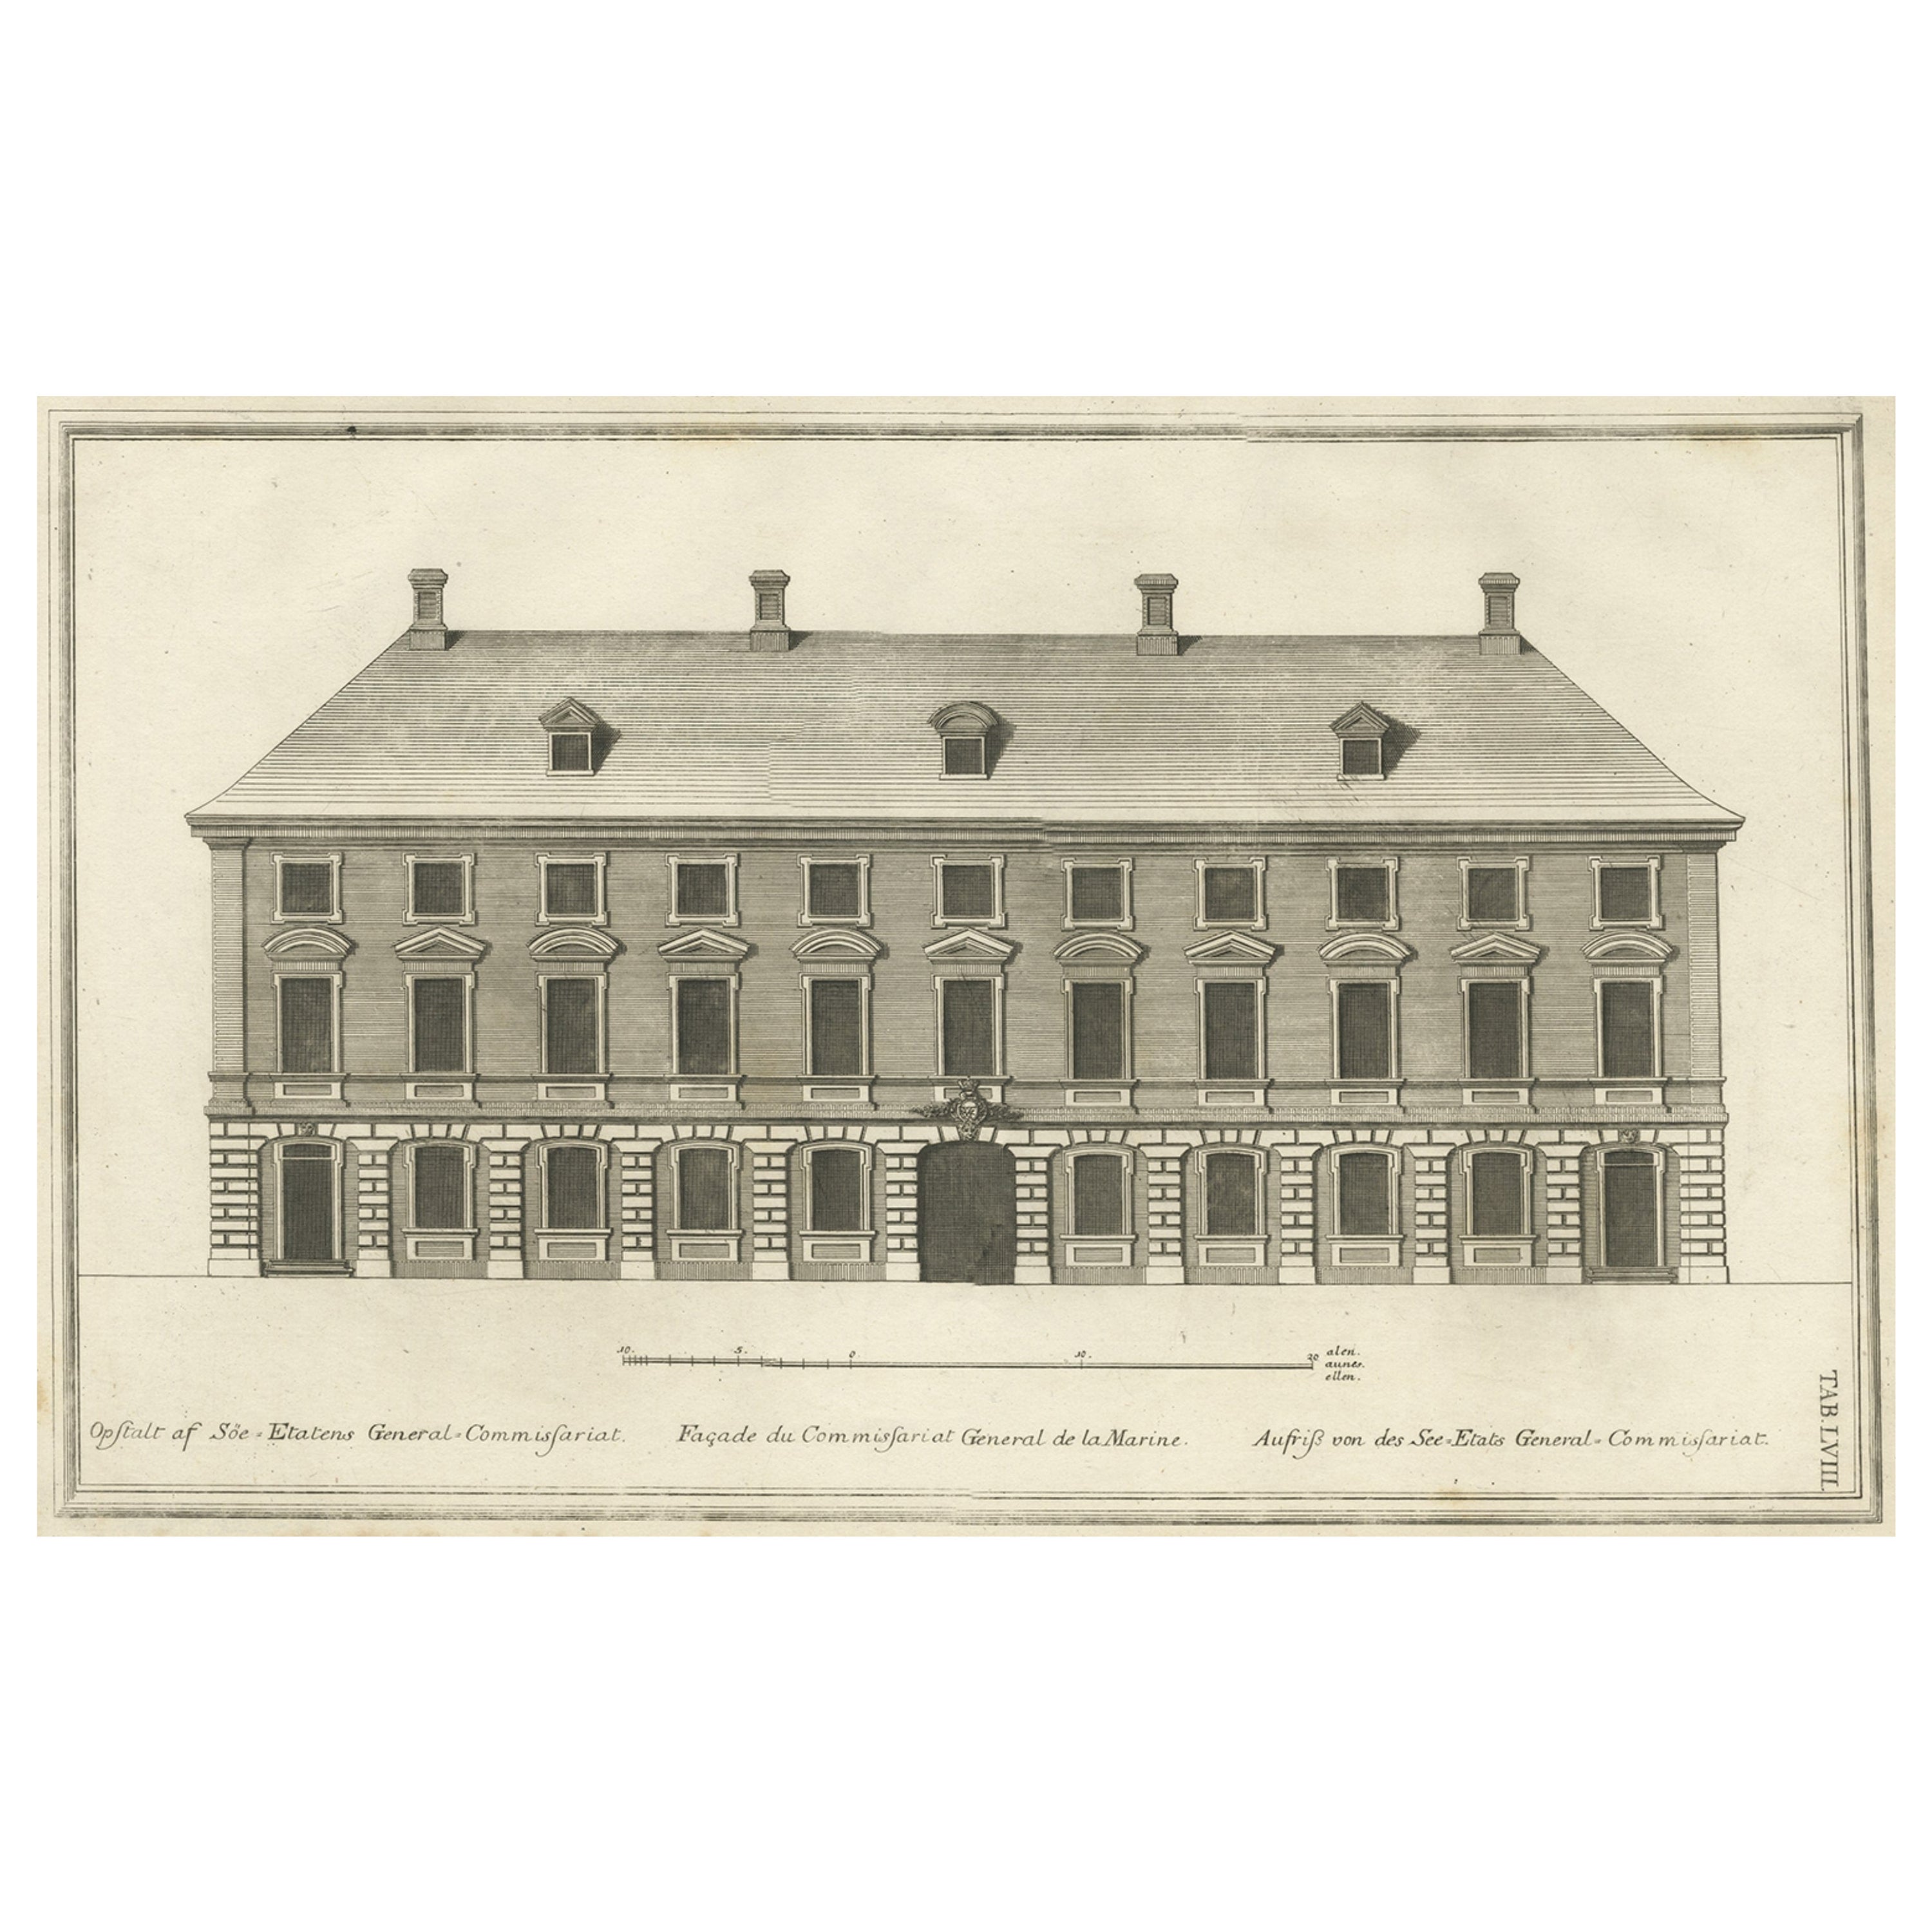 Antique Print of a Maritime Building in Copenhagen in Denmark, 1746